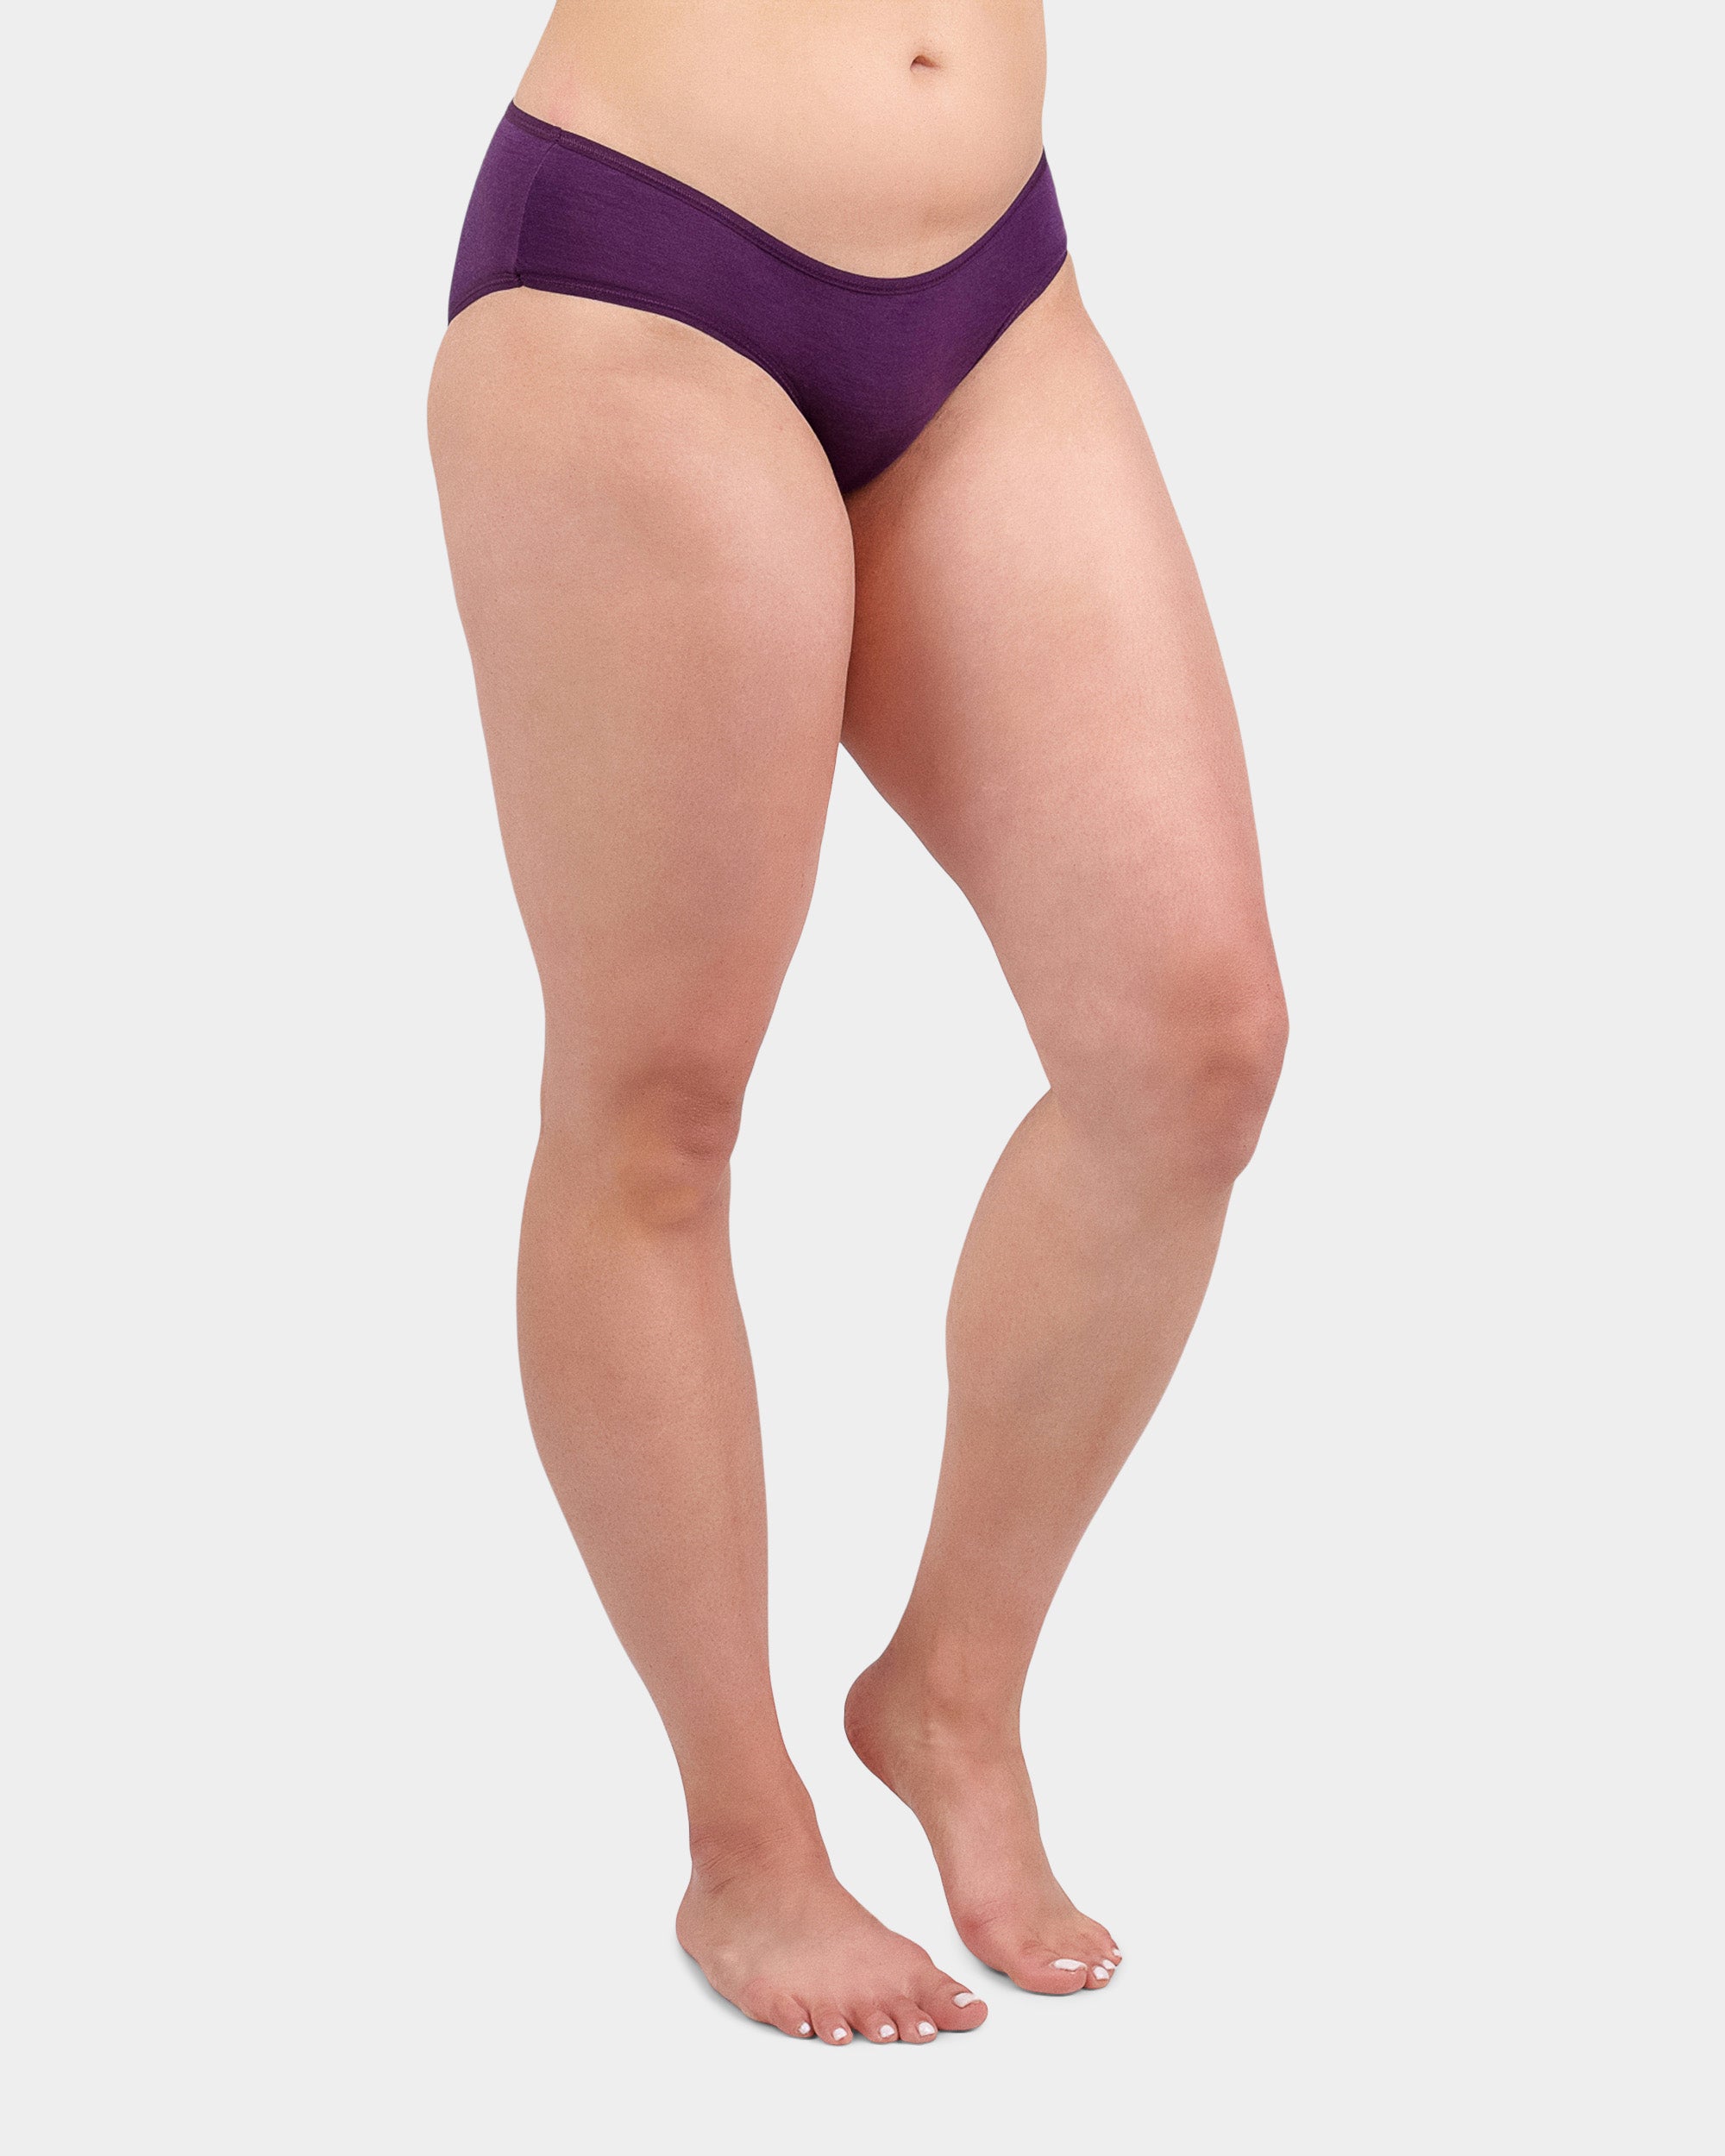 Spdoo Women's High Waisted Cotton Underwear Soft Breathable Panties Stretch  Briefs Regular & Plus Size 